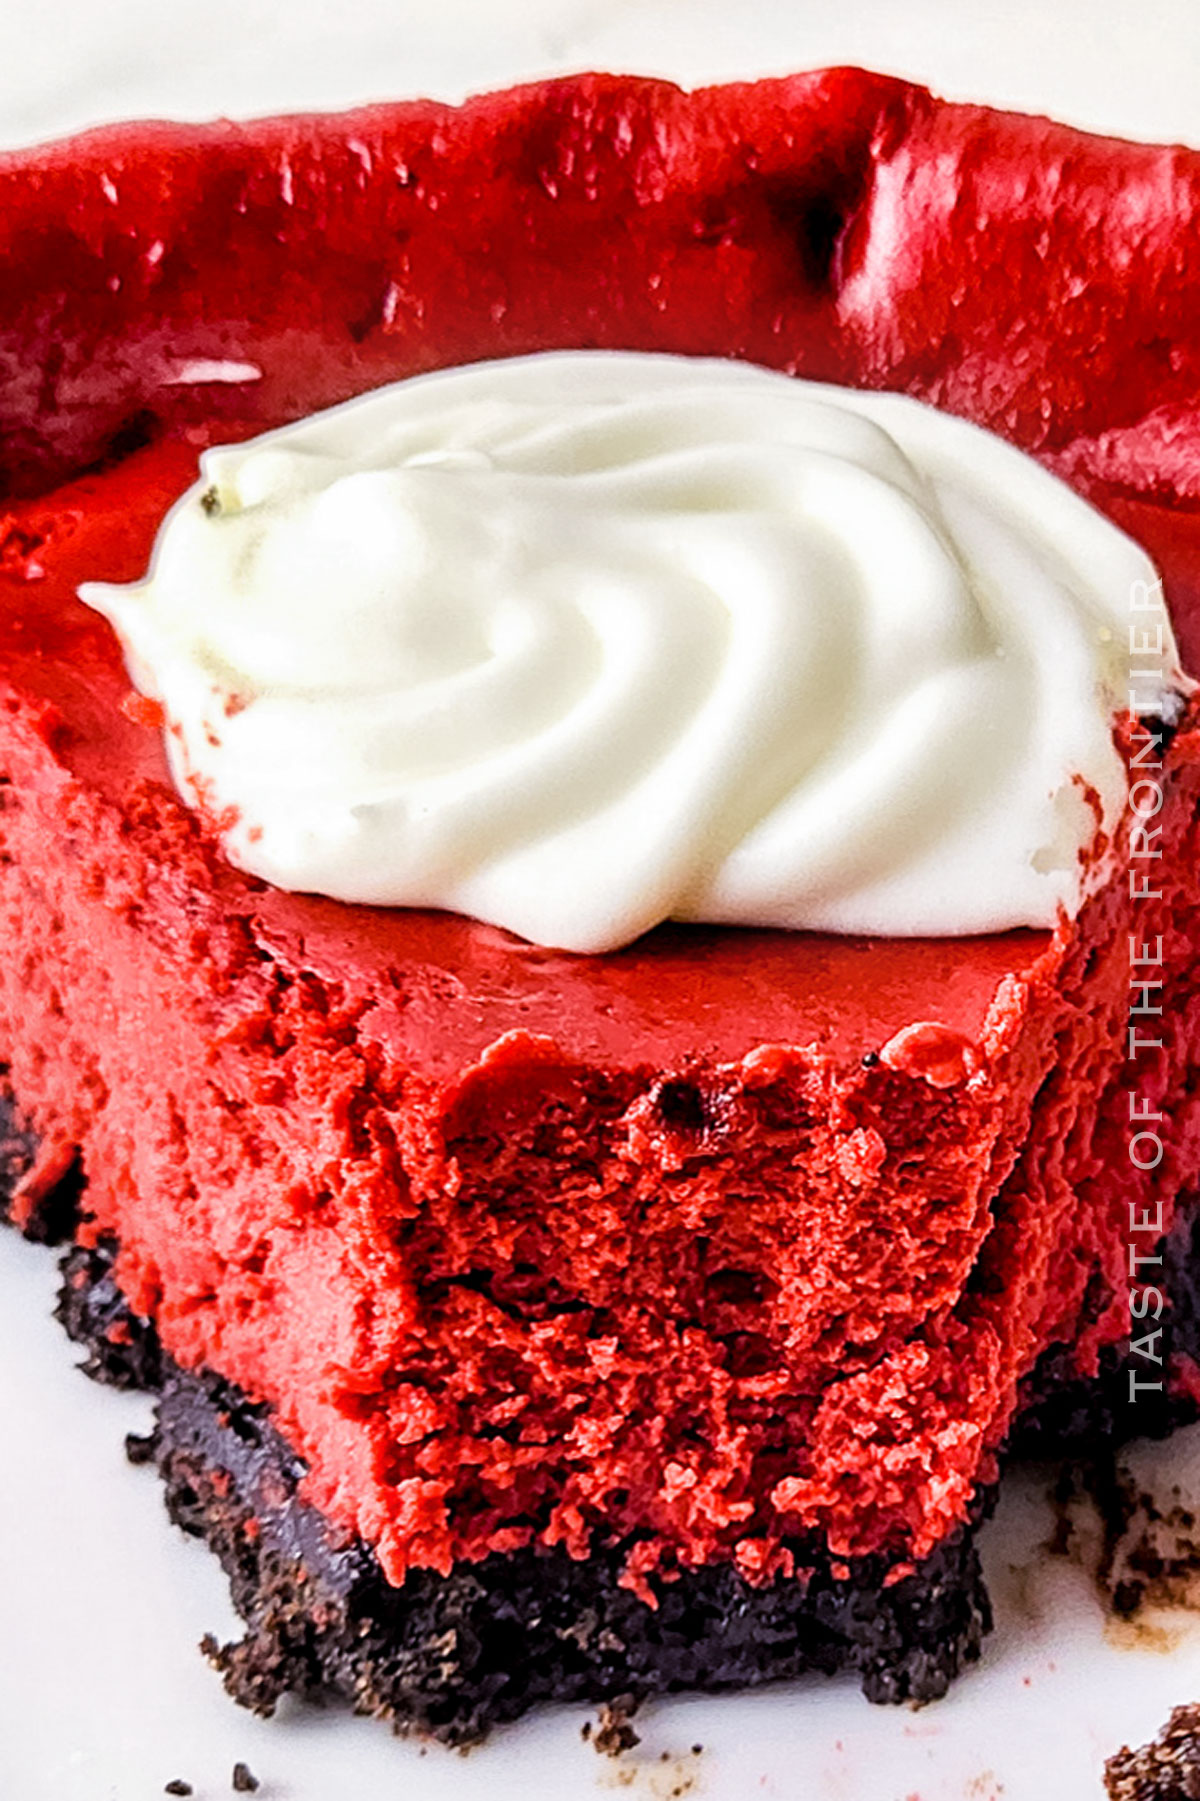 Red Velvet Oreo Cheesecake recipe